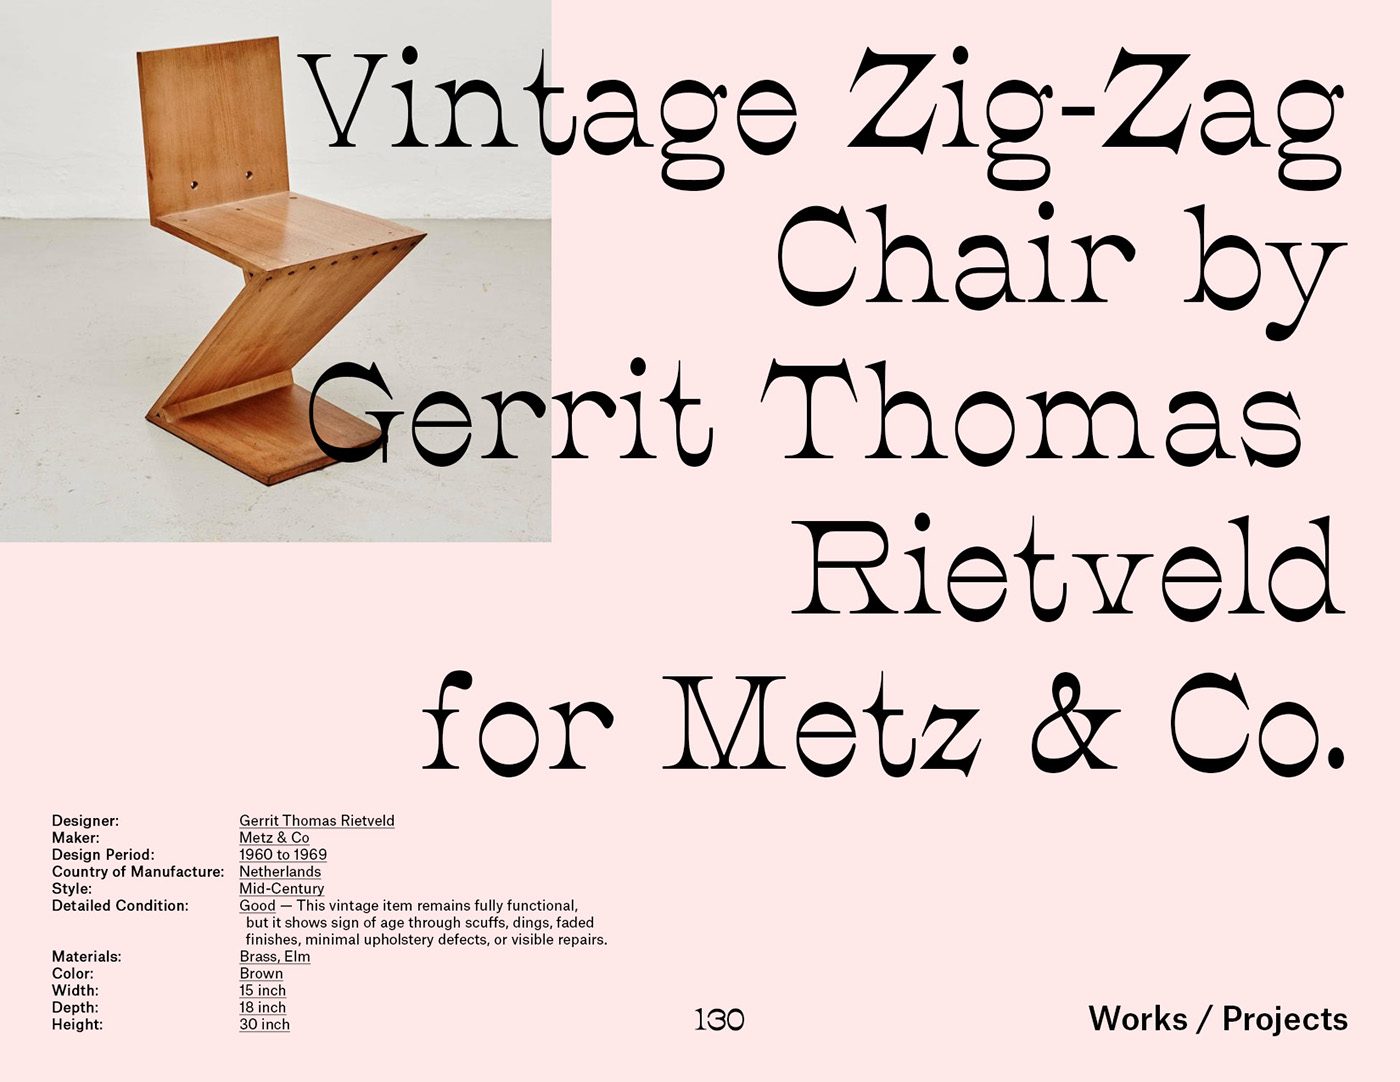 Gerrit Rietveld de stijl art Grafik Design graphic design  editorial book design poster